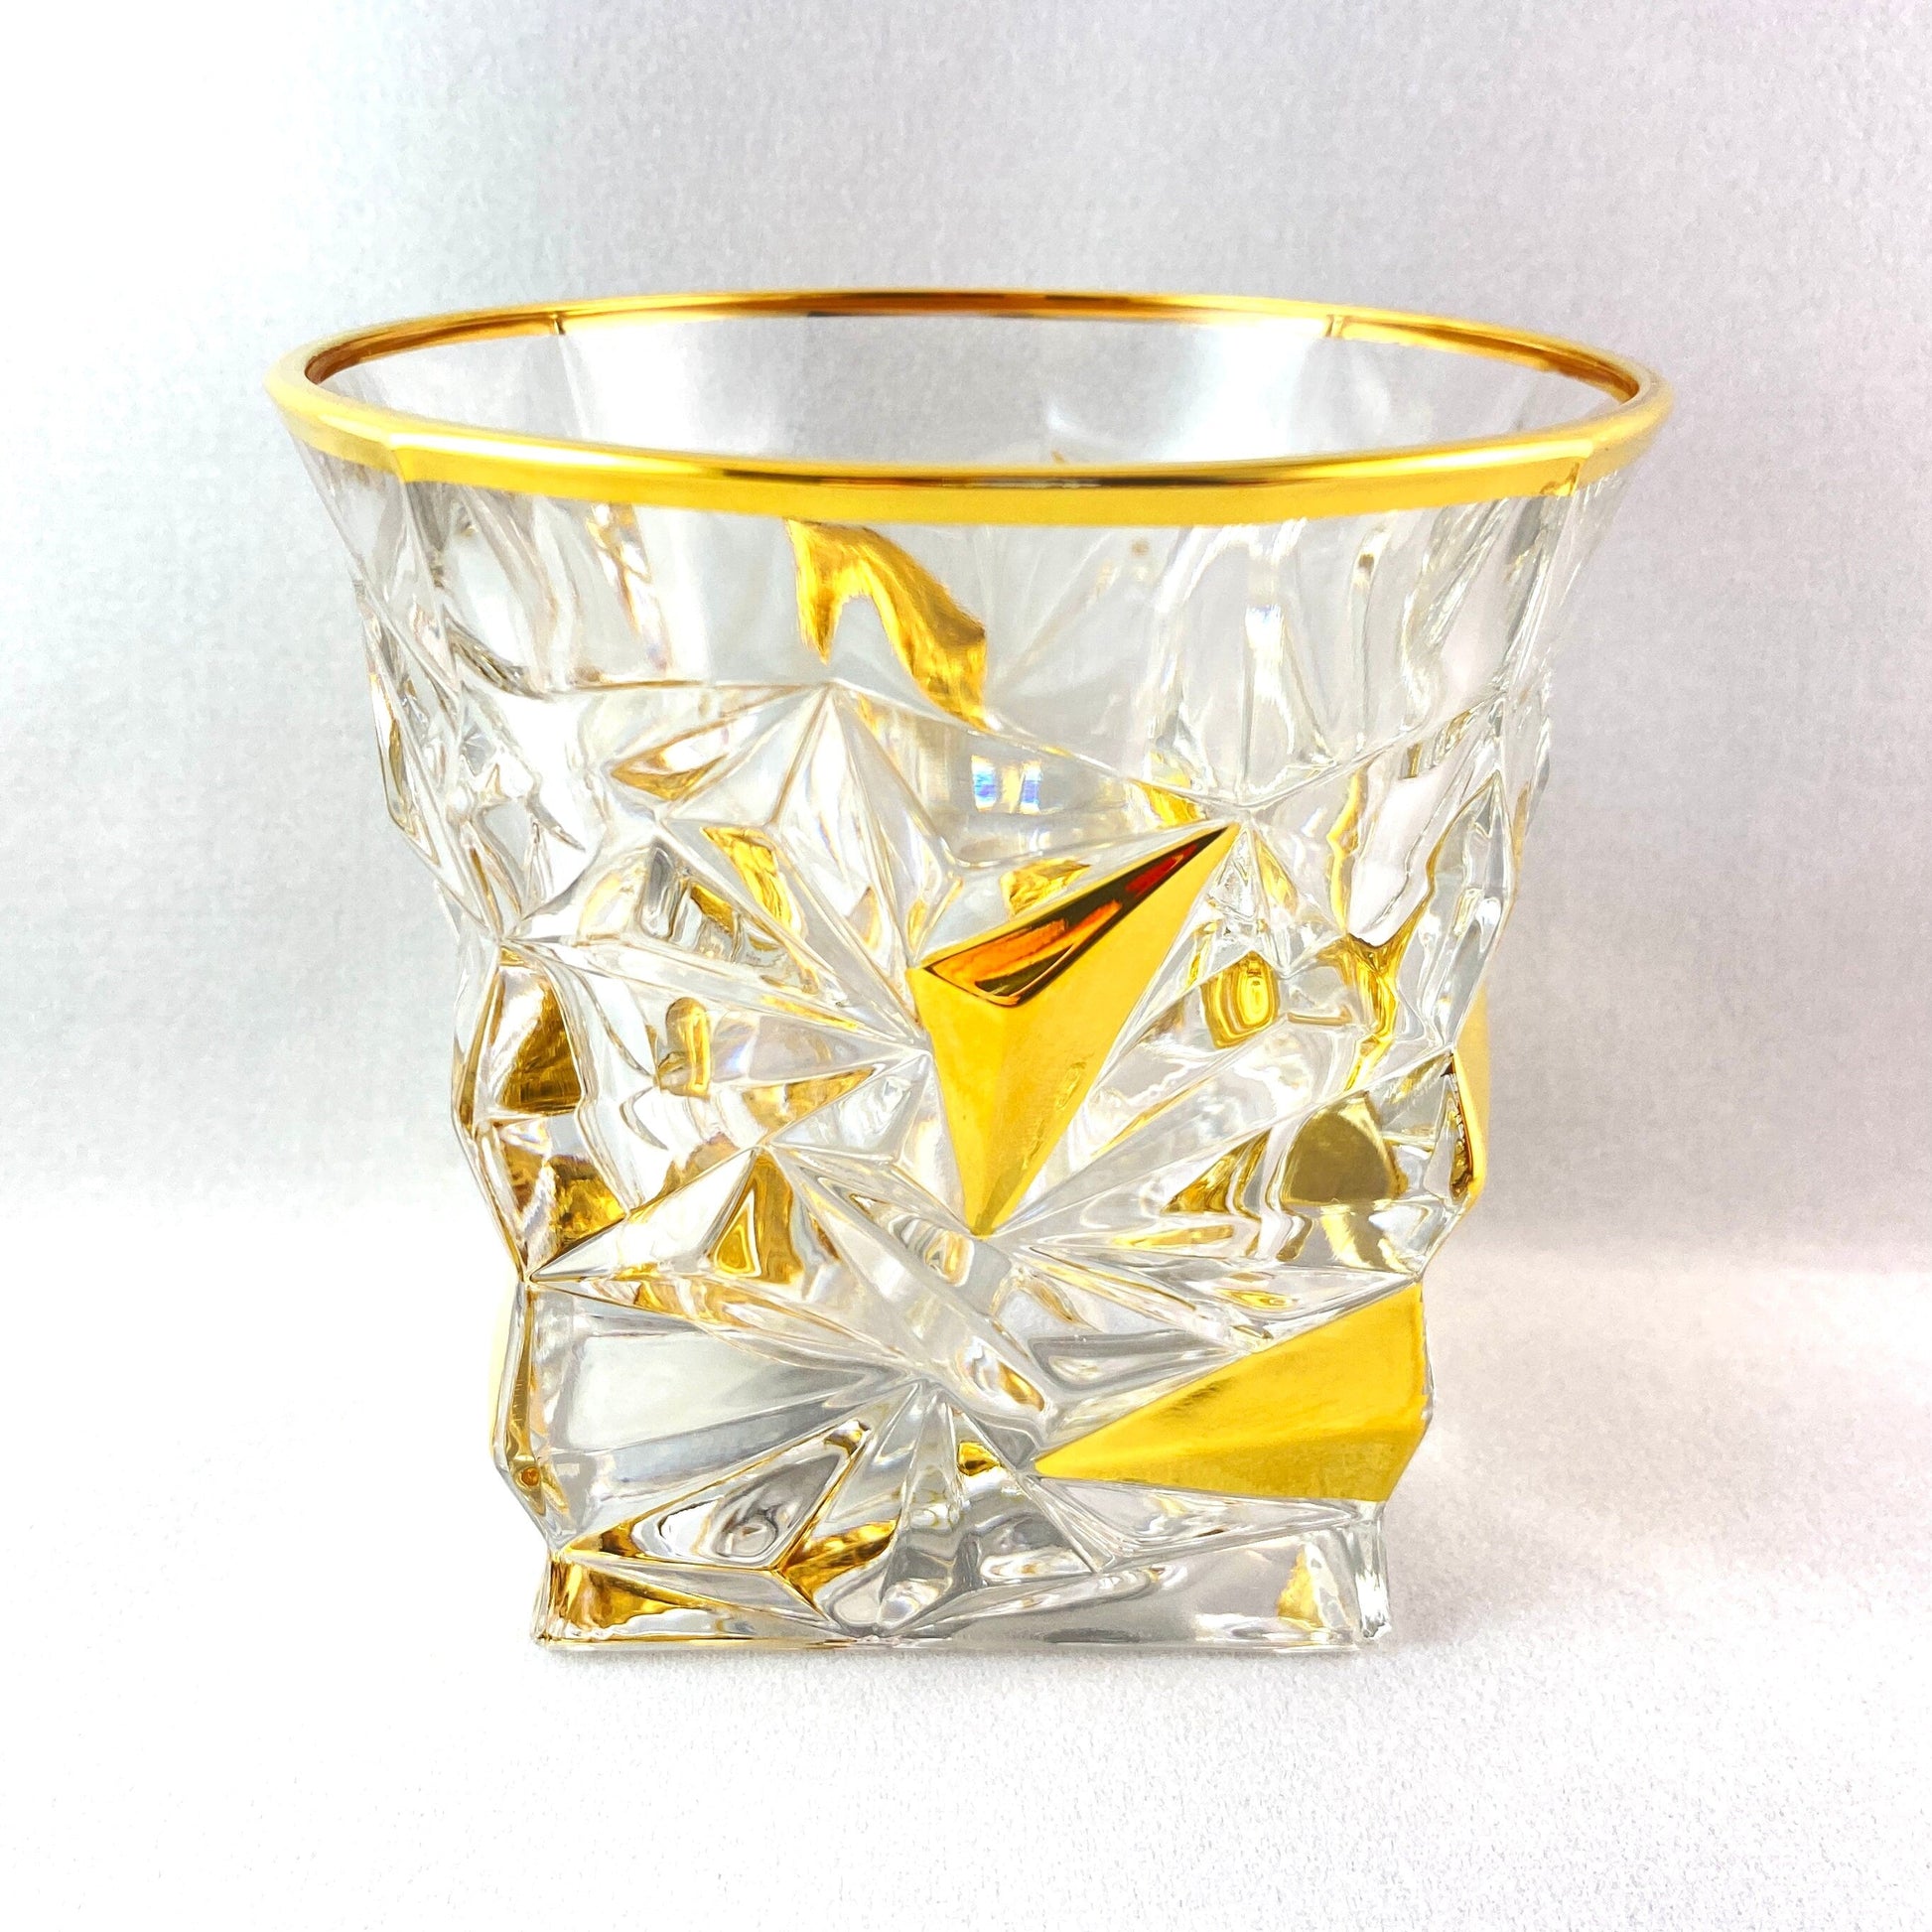 24kt Gold Venetian Glass Whiskey Glass - Handmade in Italy, Colorful Murano Glass